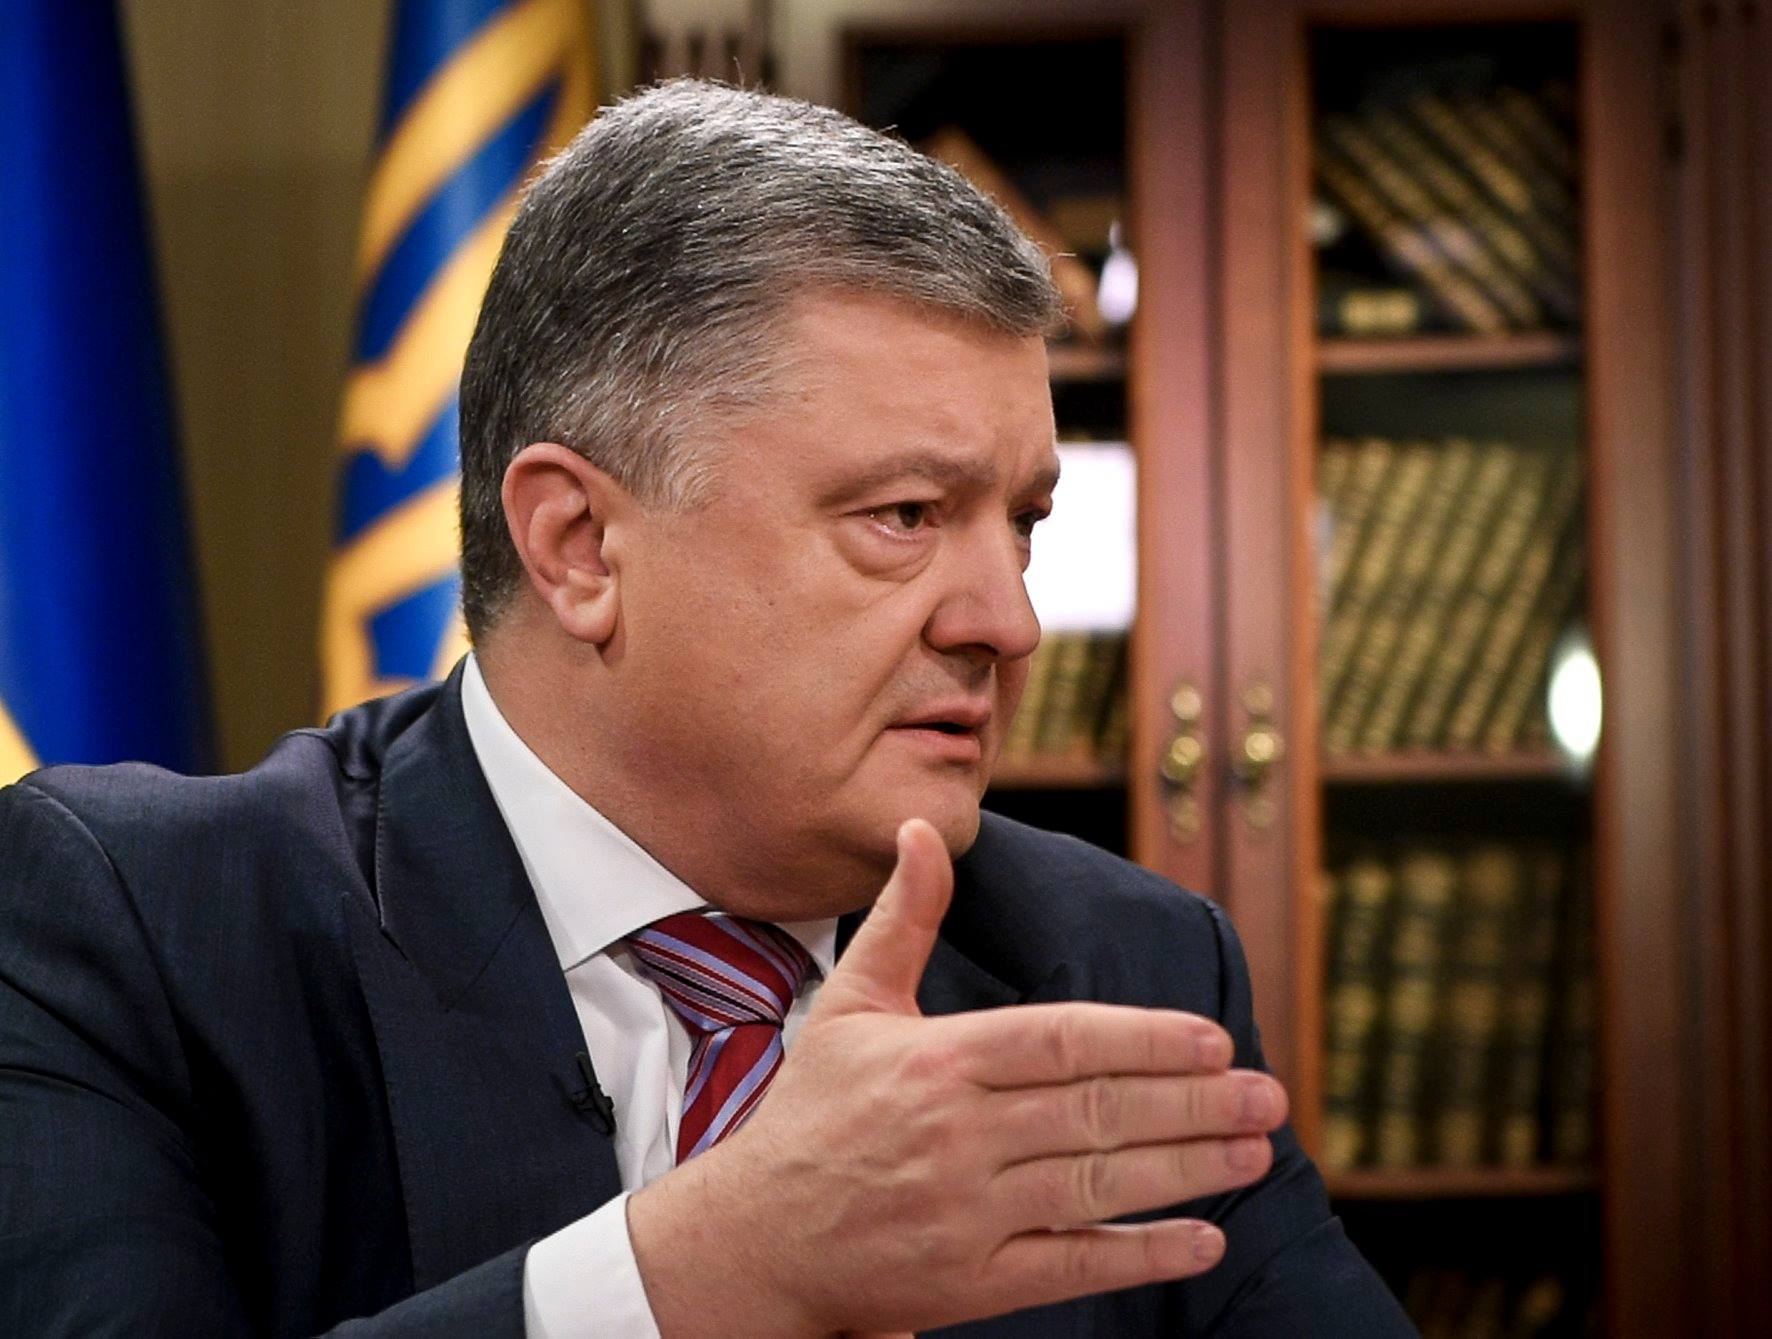 7 березня президент Порошенко дасть інтерв'ю трьом українським телеканалам